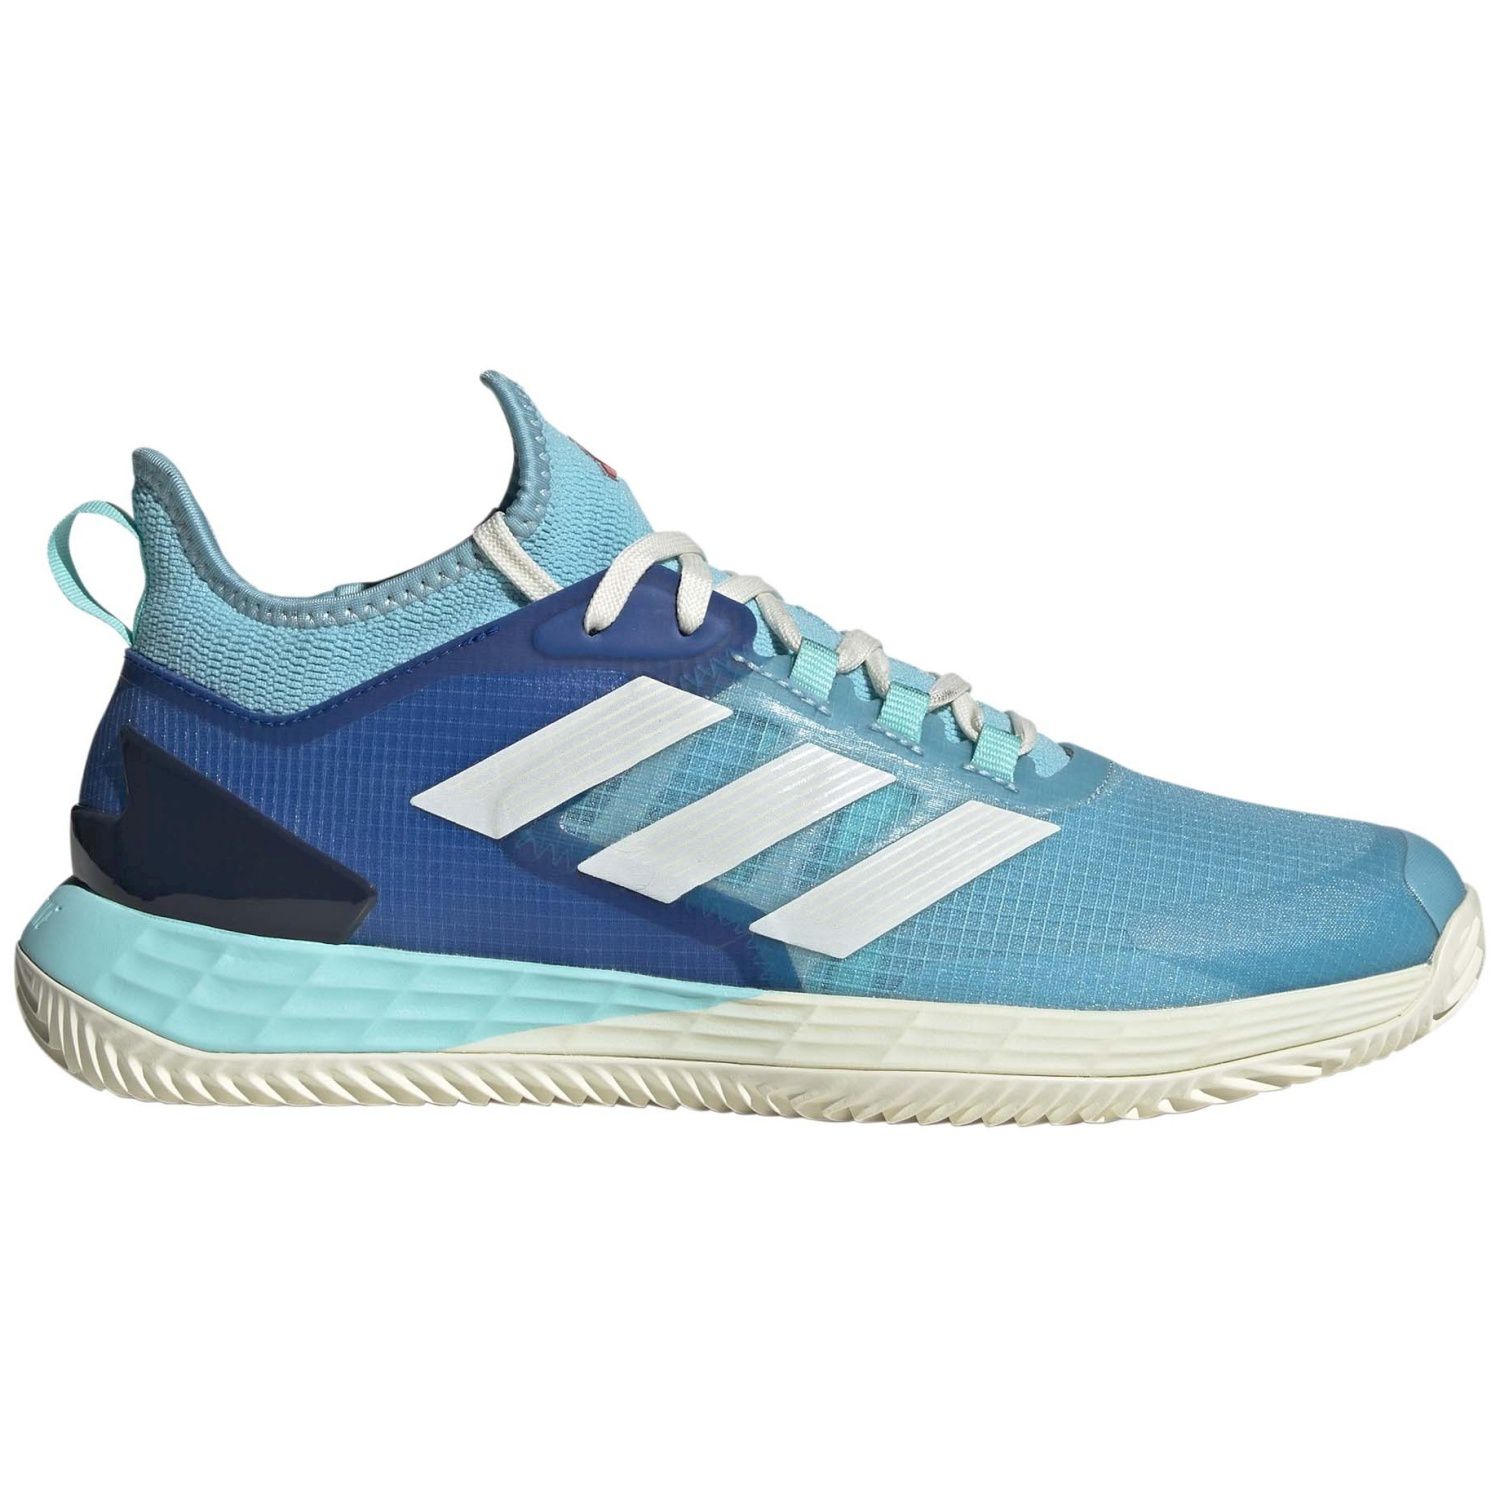 Zapatillas adidas Adizero Ubersonic 4.1 Cl M - azul - 